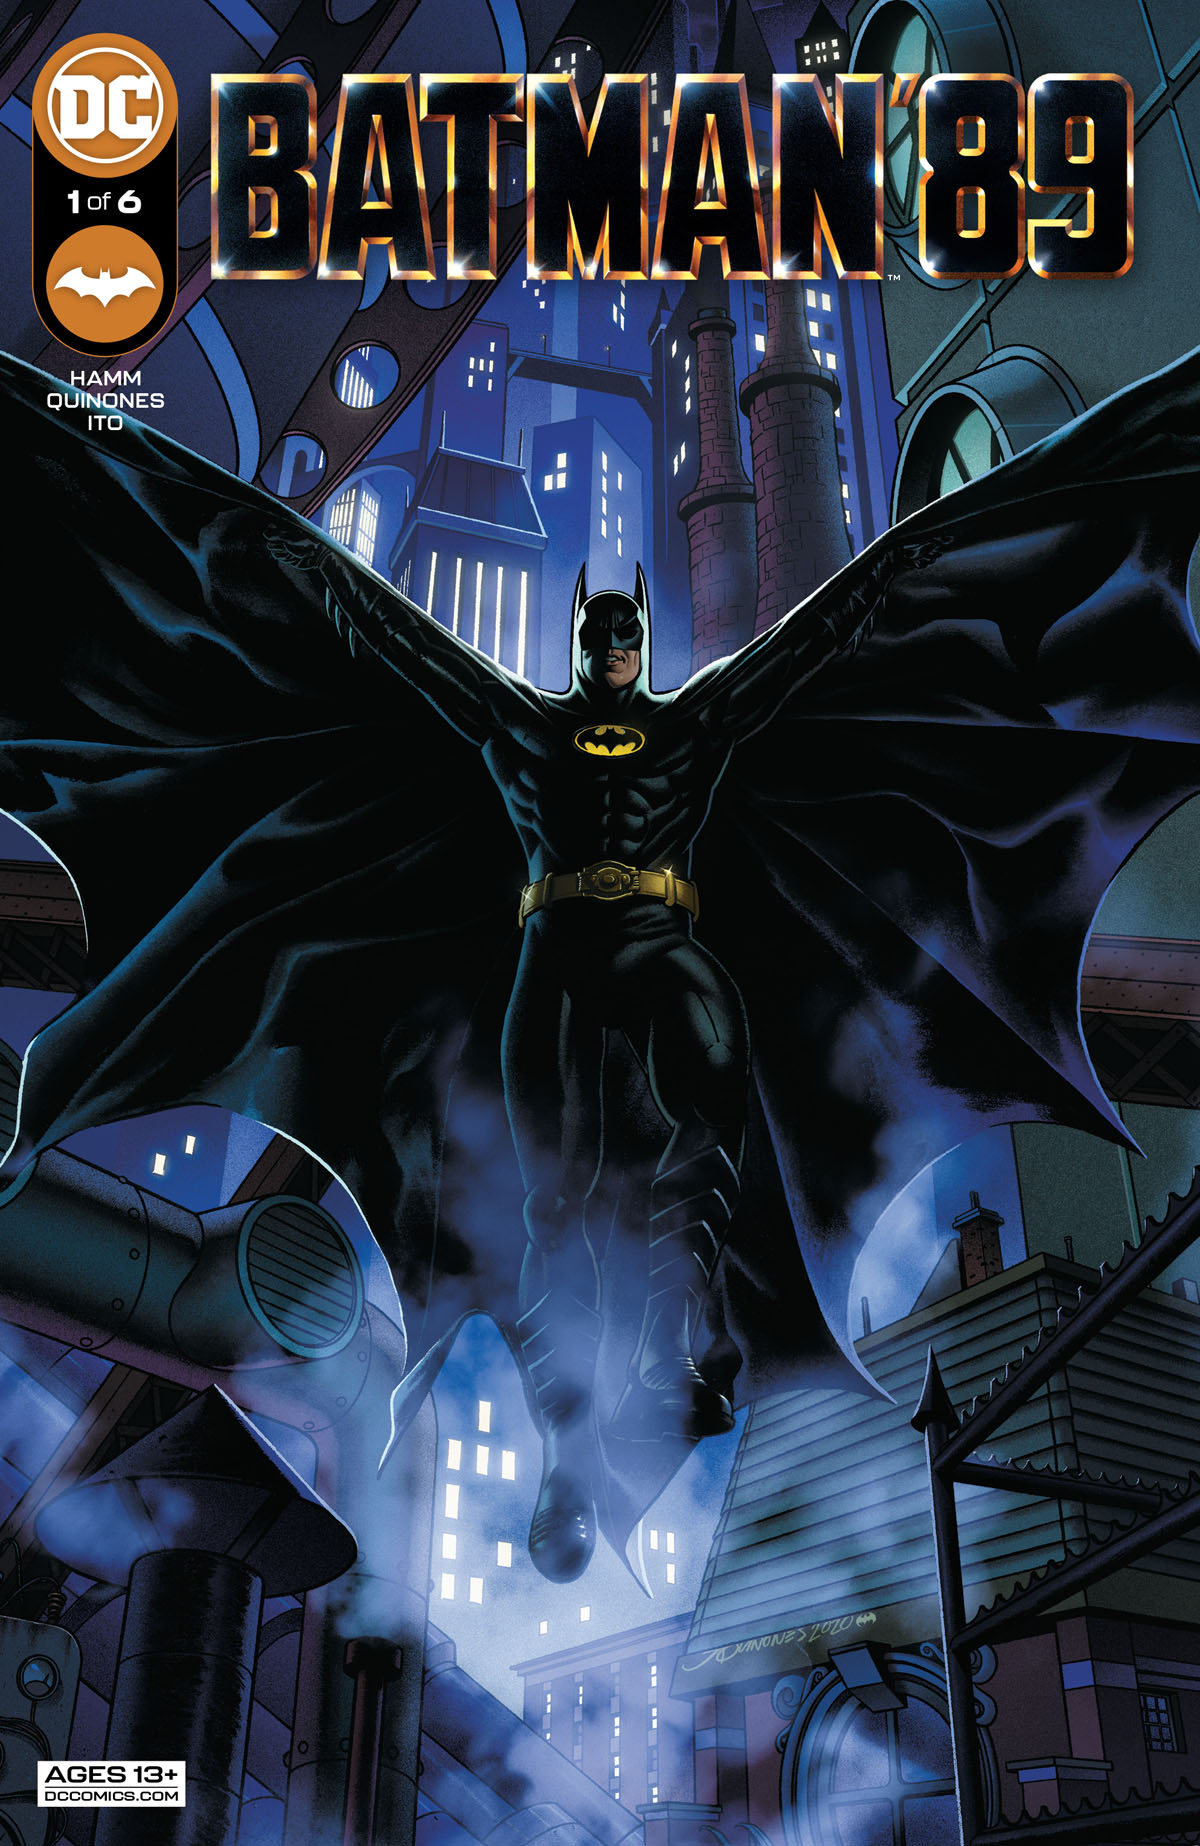 Batman '89 #1 Extended Preview #1